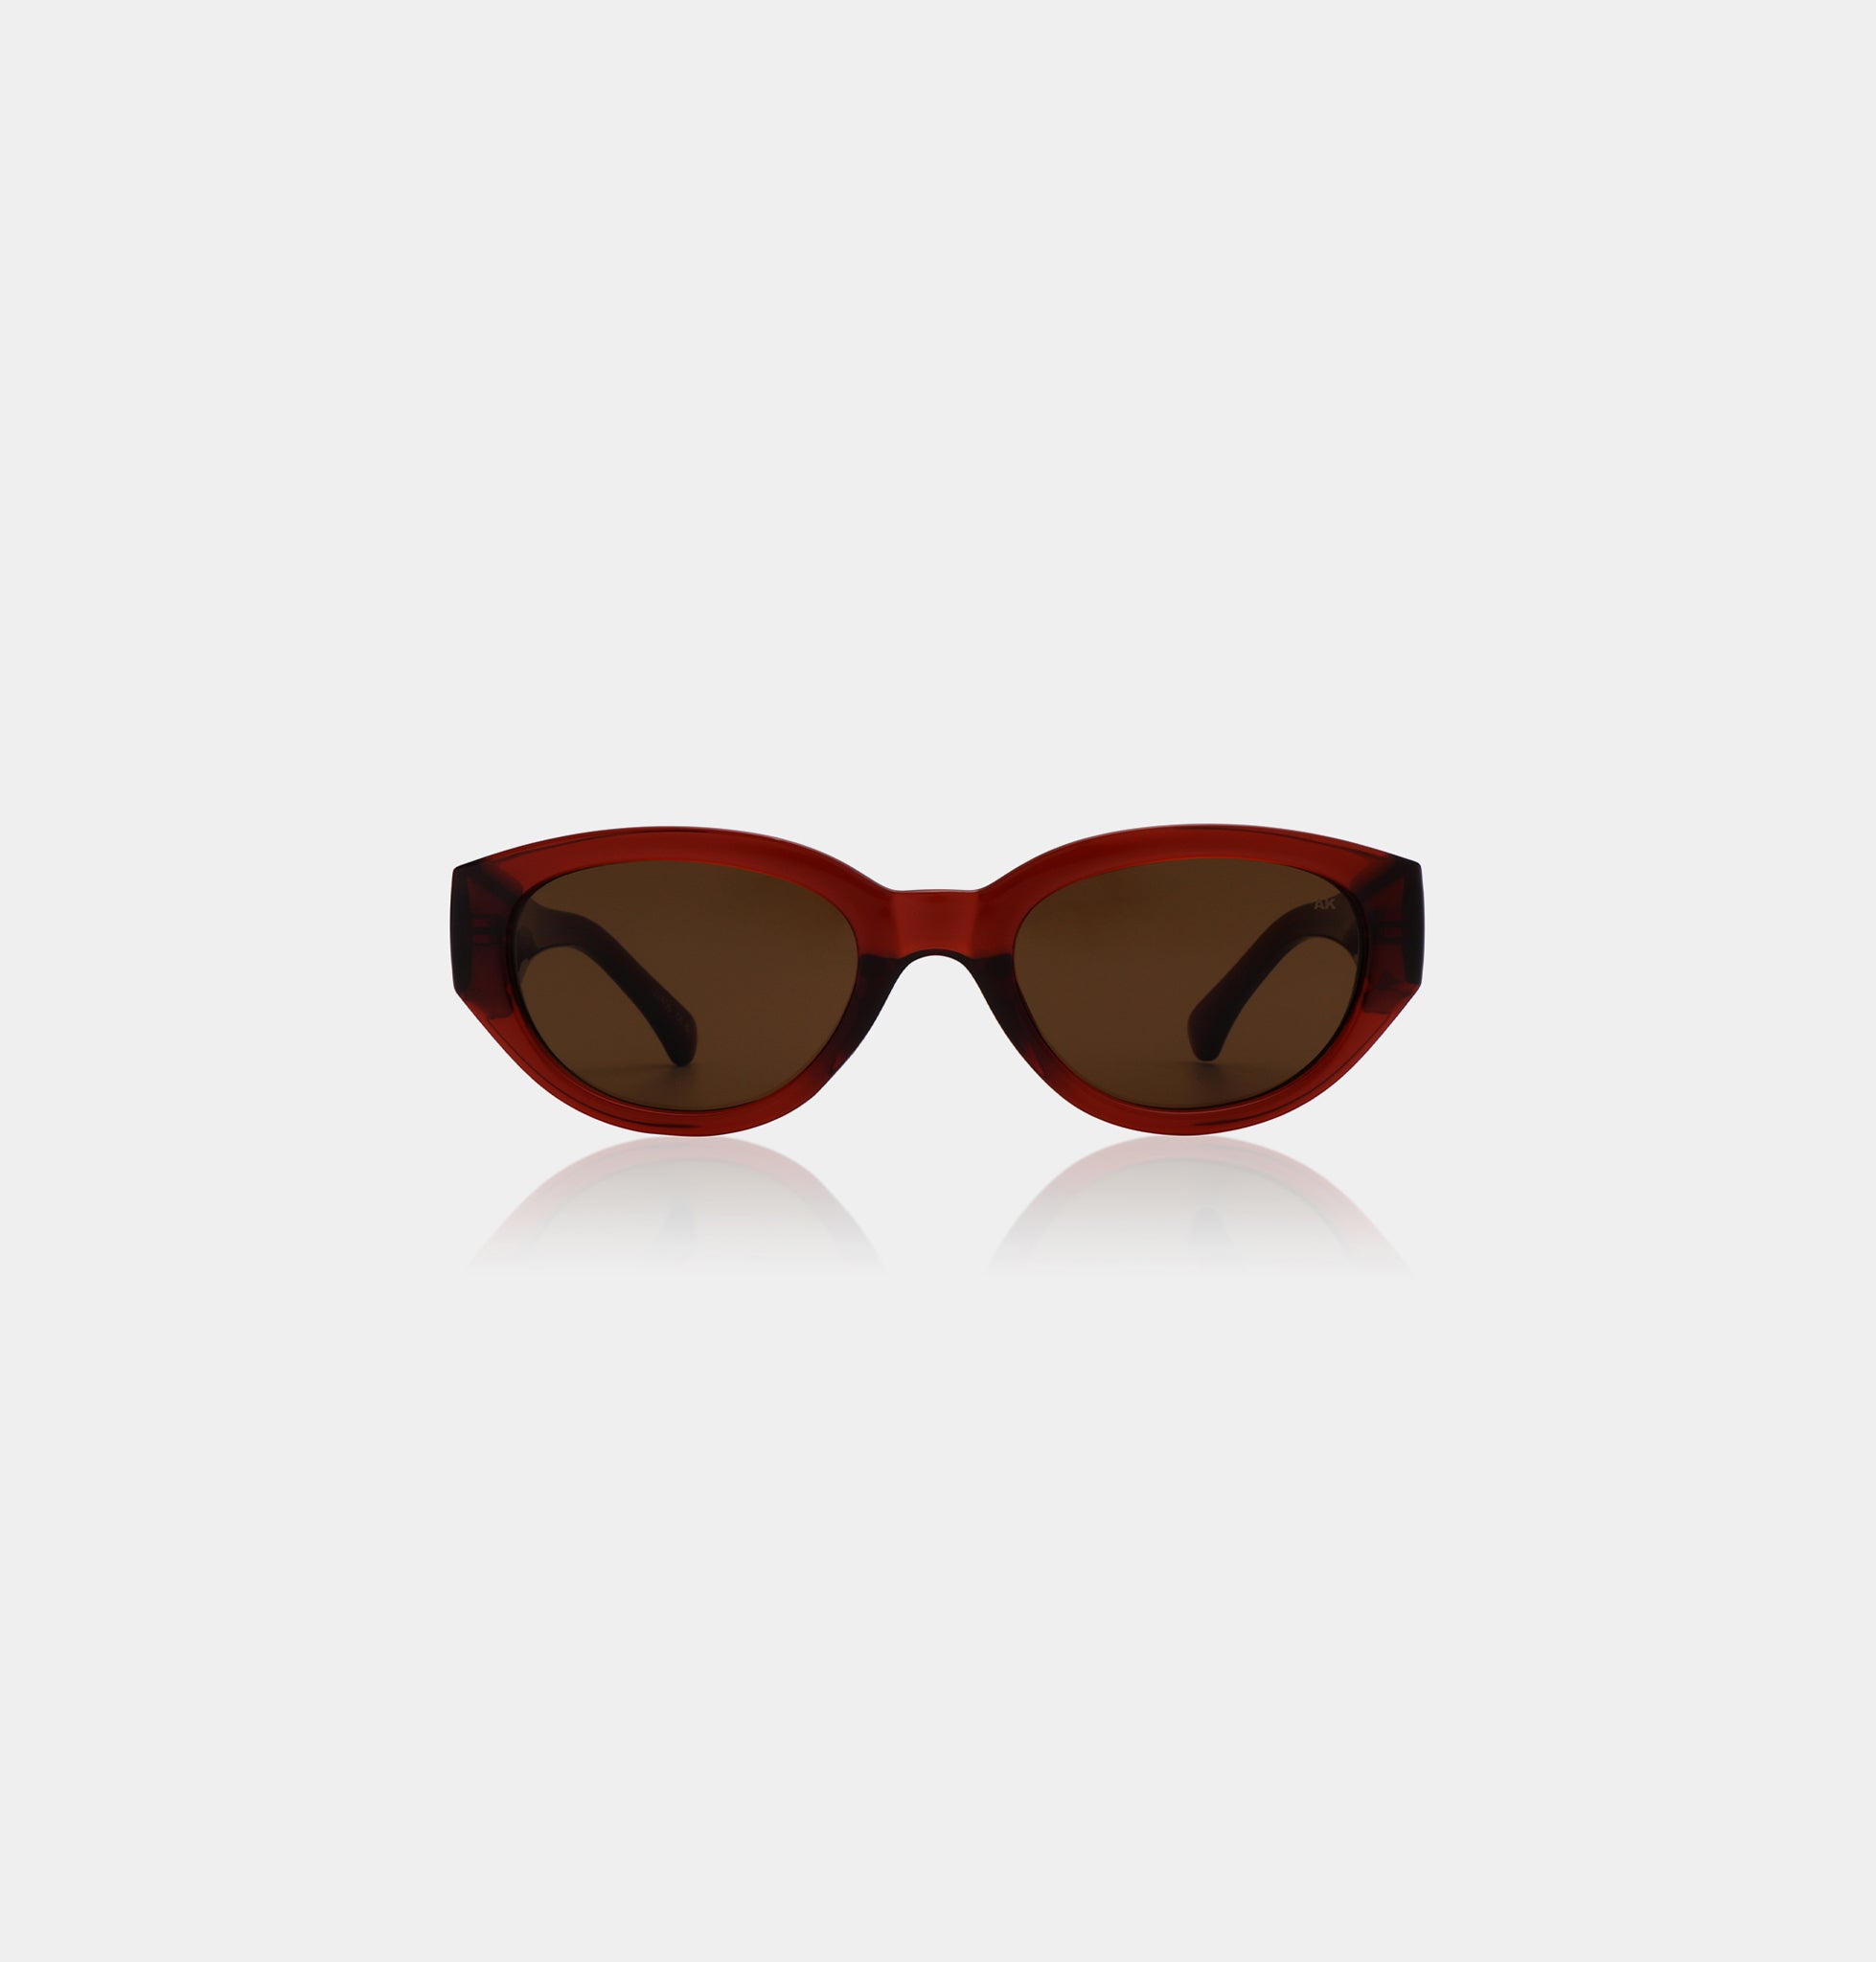 Winnie sunglasses in brown